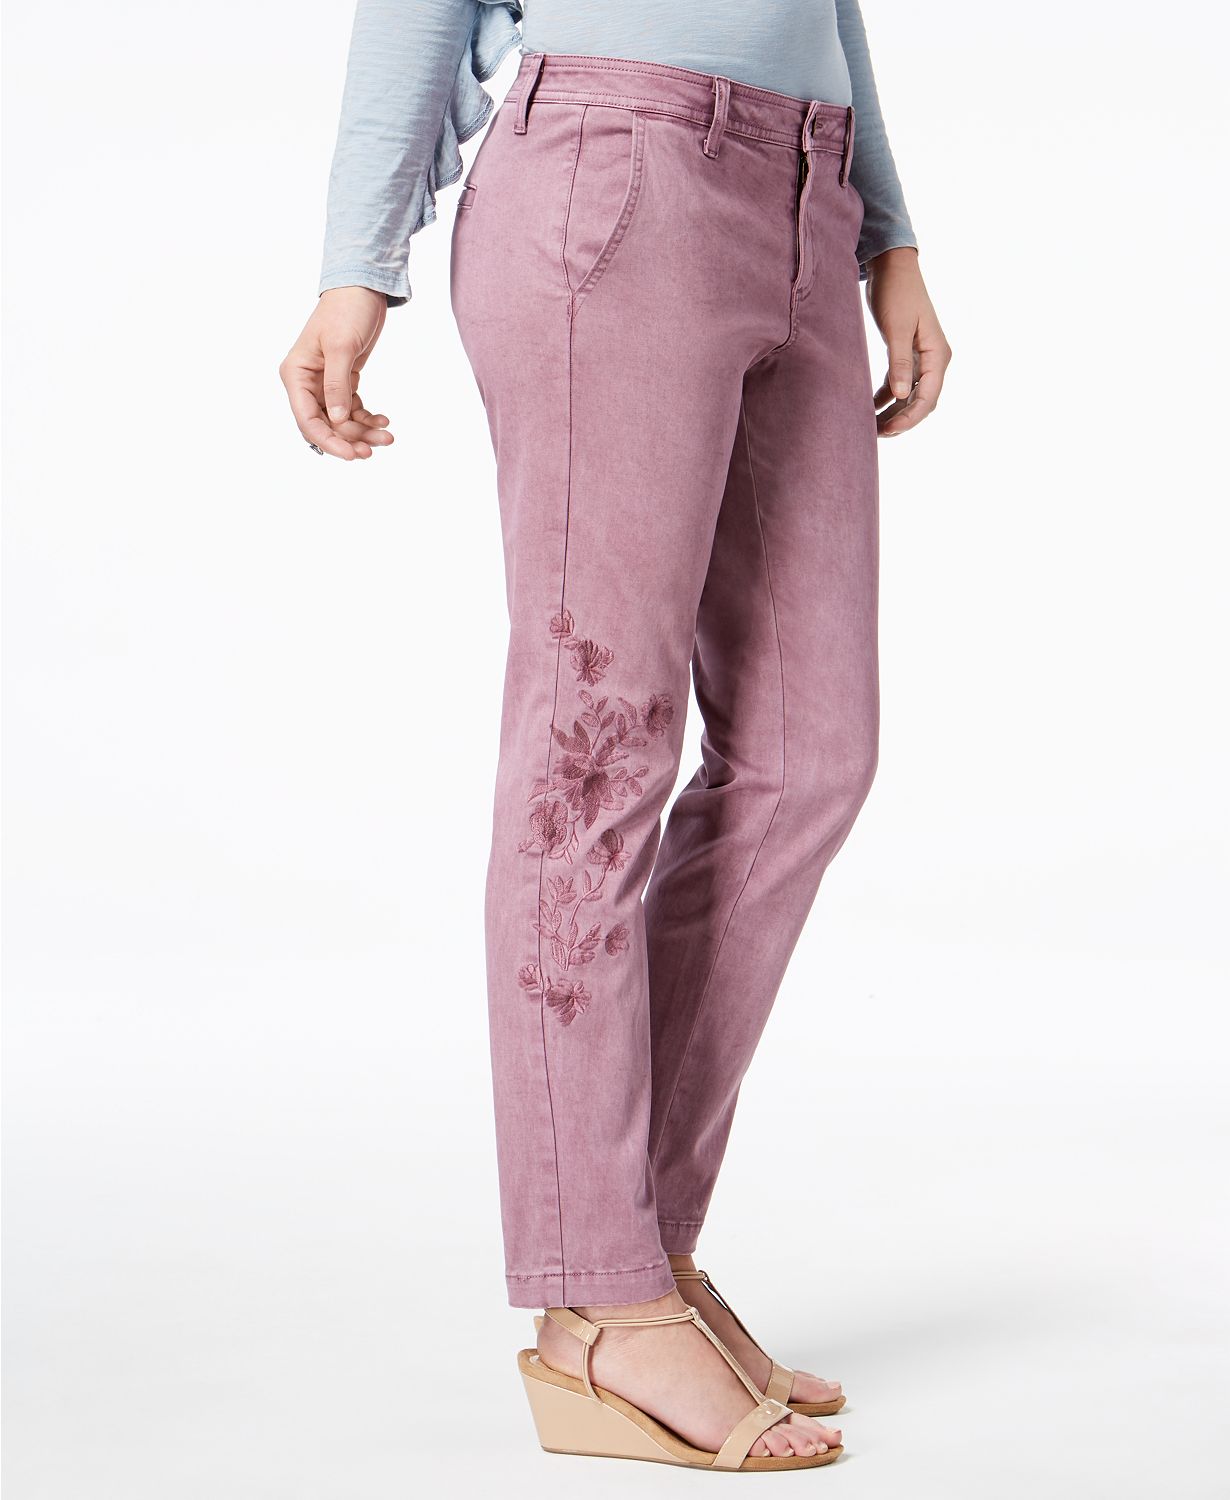 Style Co Embroidered Skinny Pants, Crea Antique Mauve 6